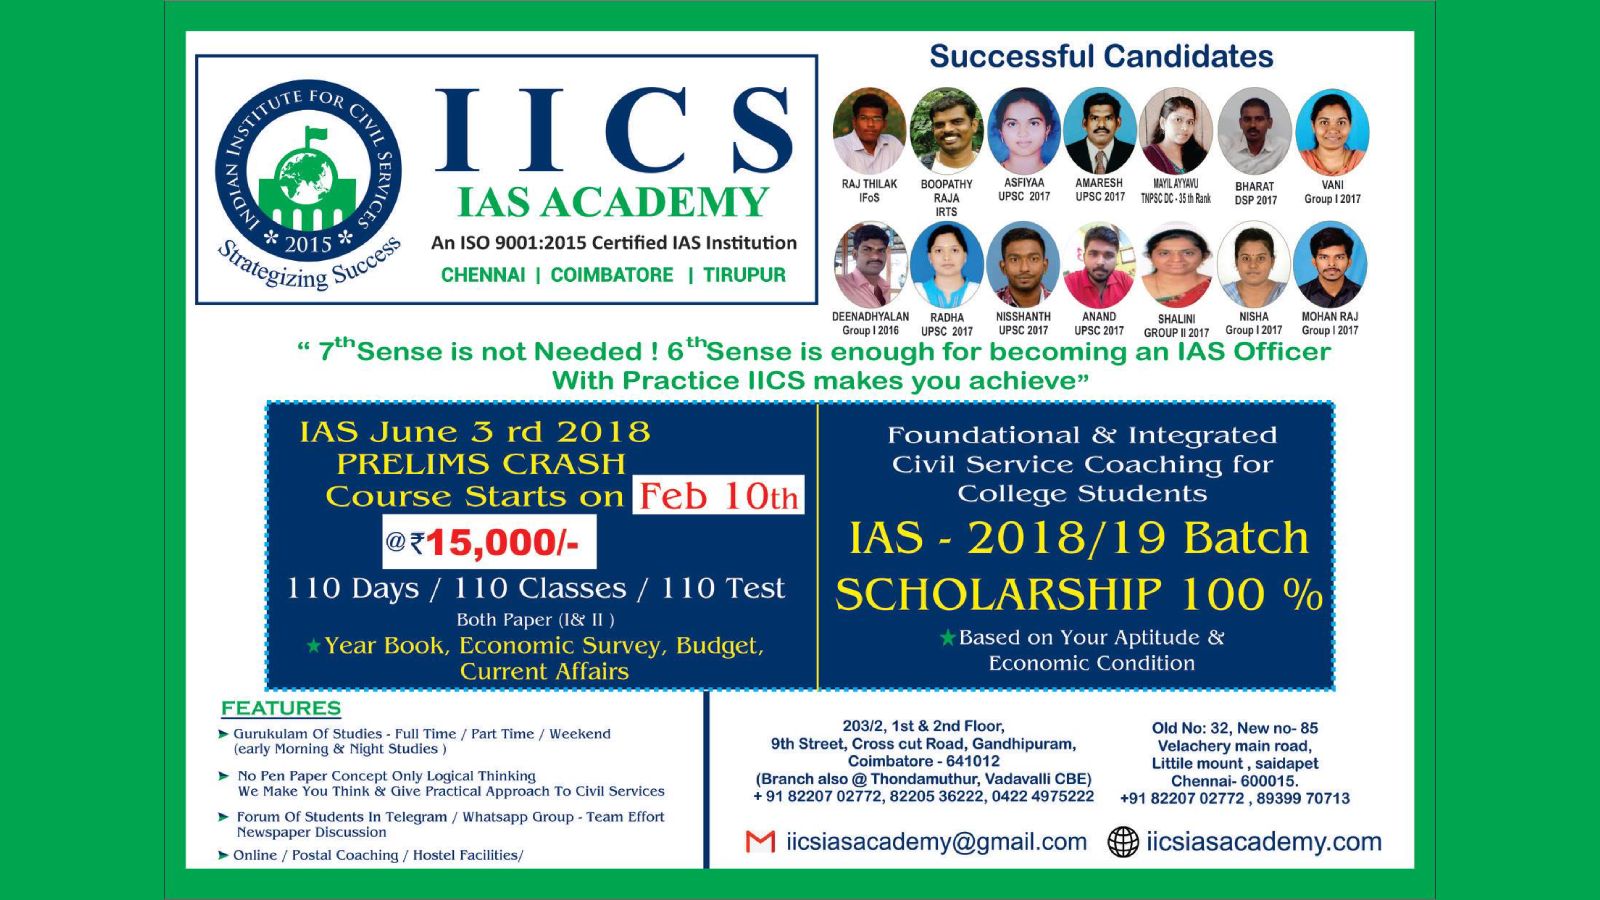 IICS IAS Academy Chennai Hero Slider - 1